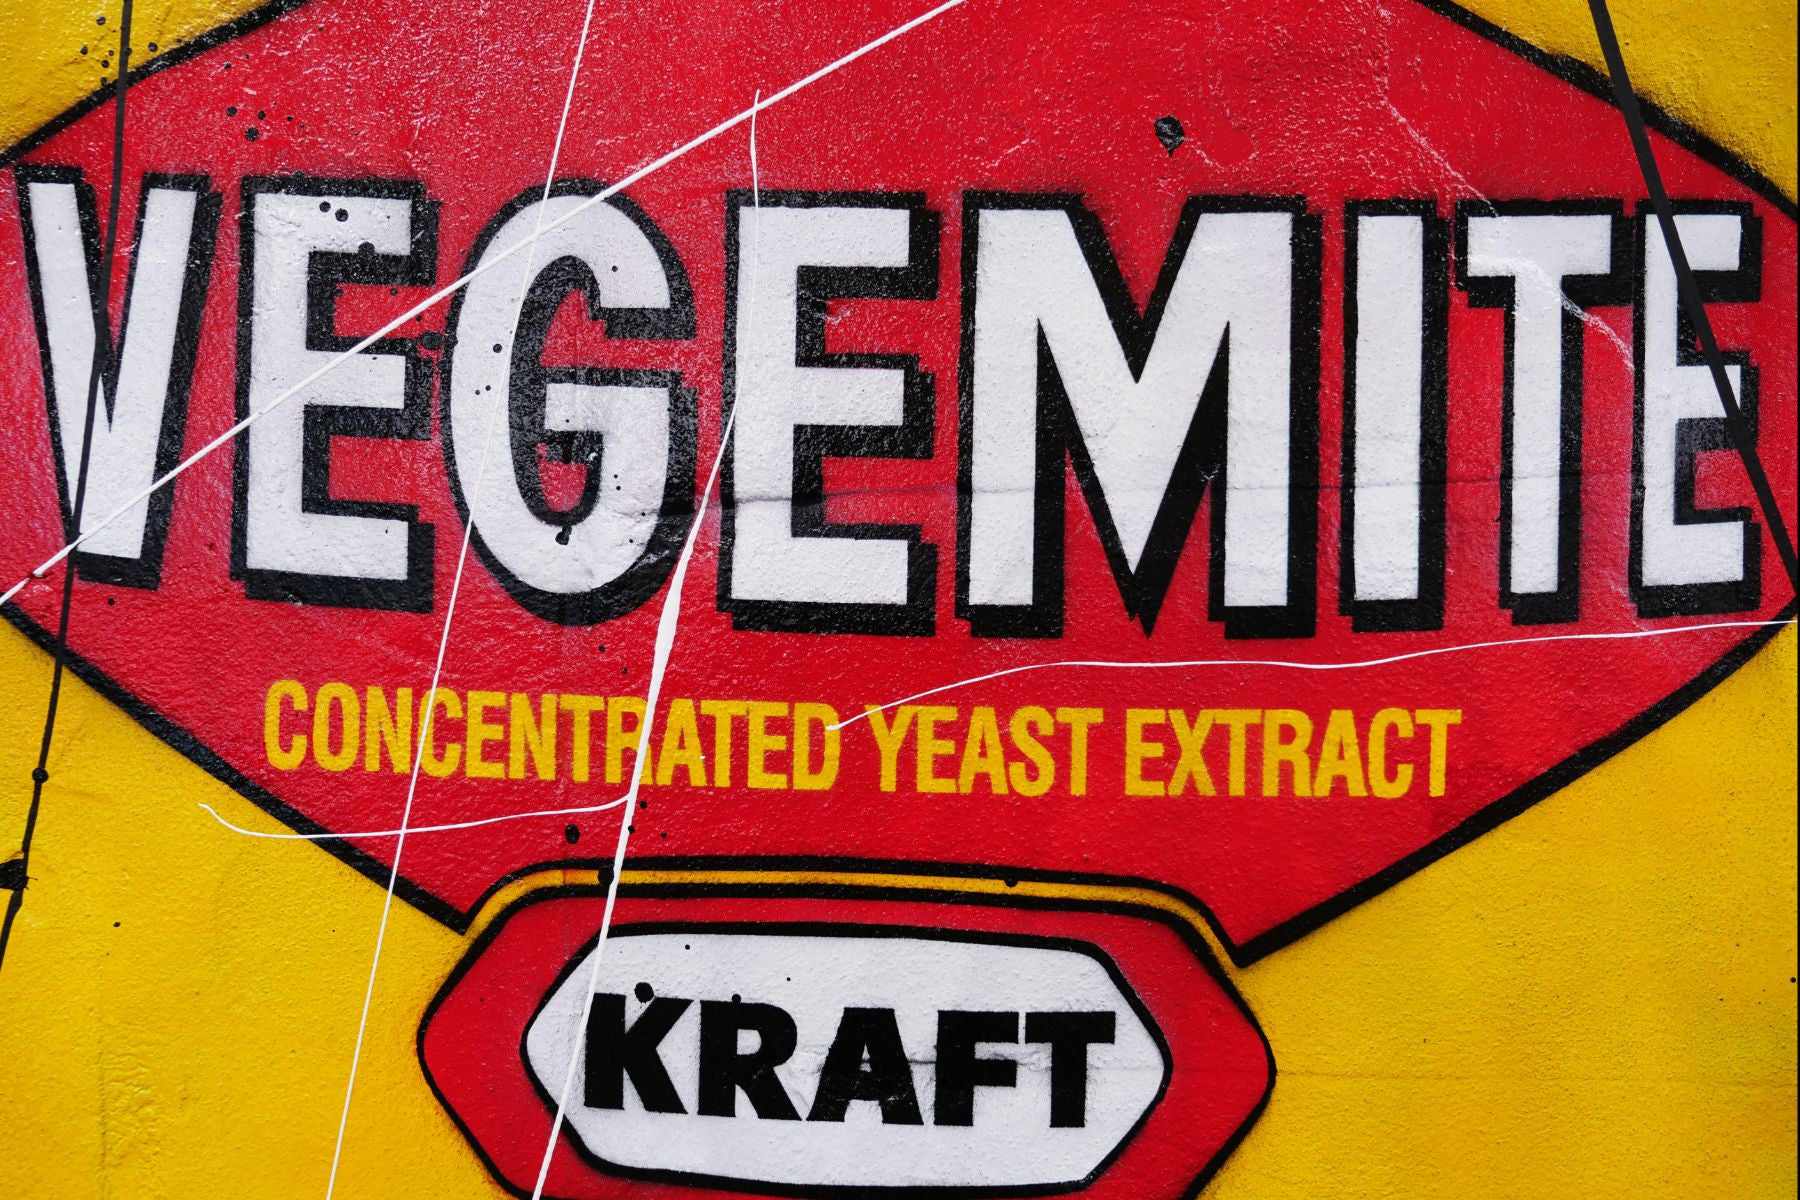 Vegemite Might 120cm x 100cm Vegemite Textured Urban Pop Art Painting (SOLD)